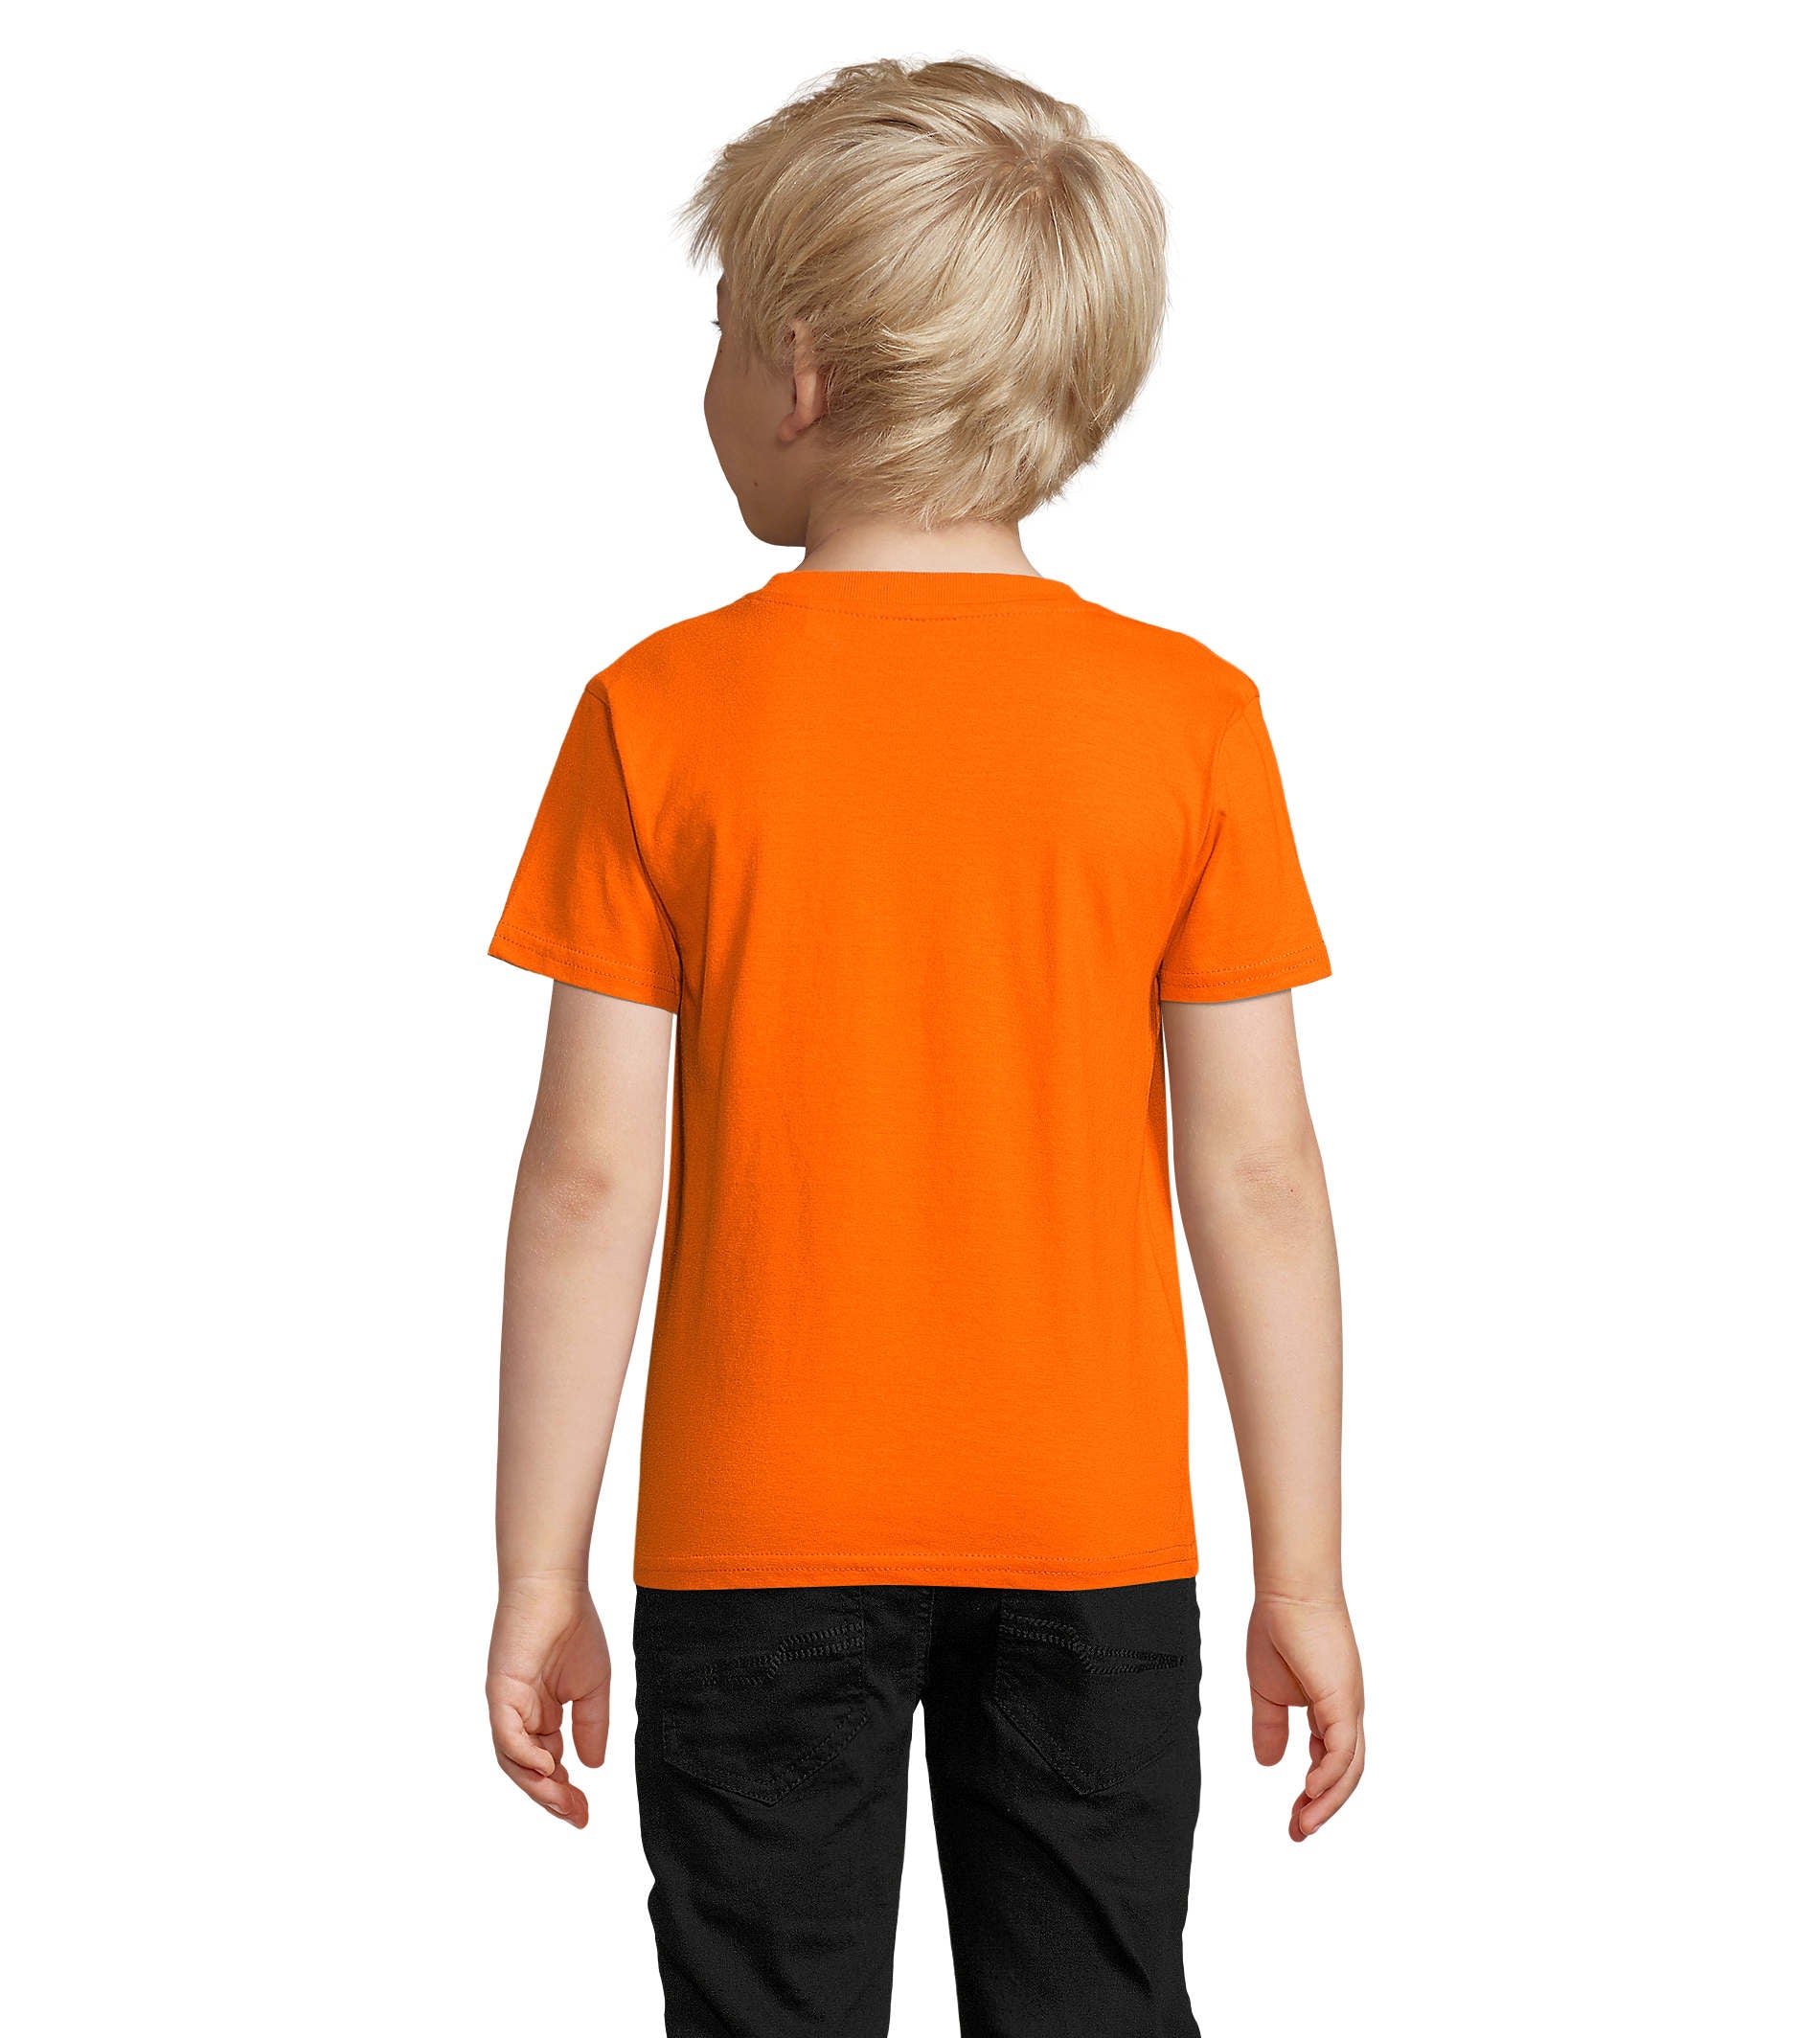 T-shirt criança jersey de cor laranja